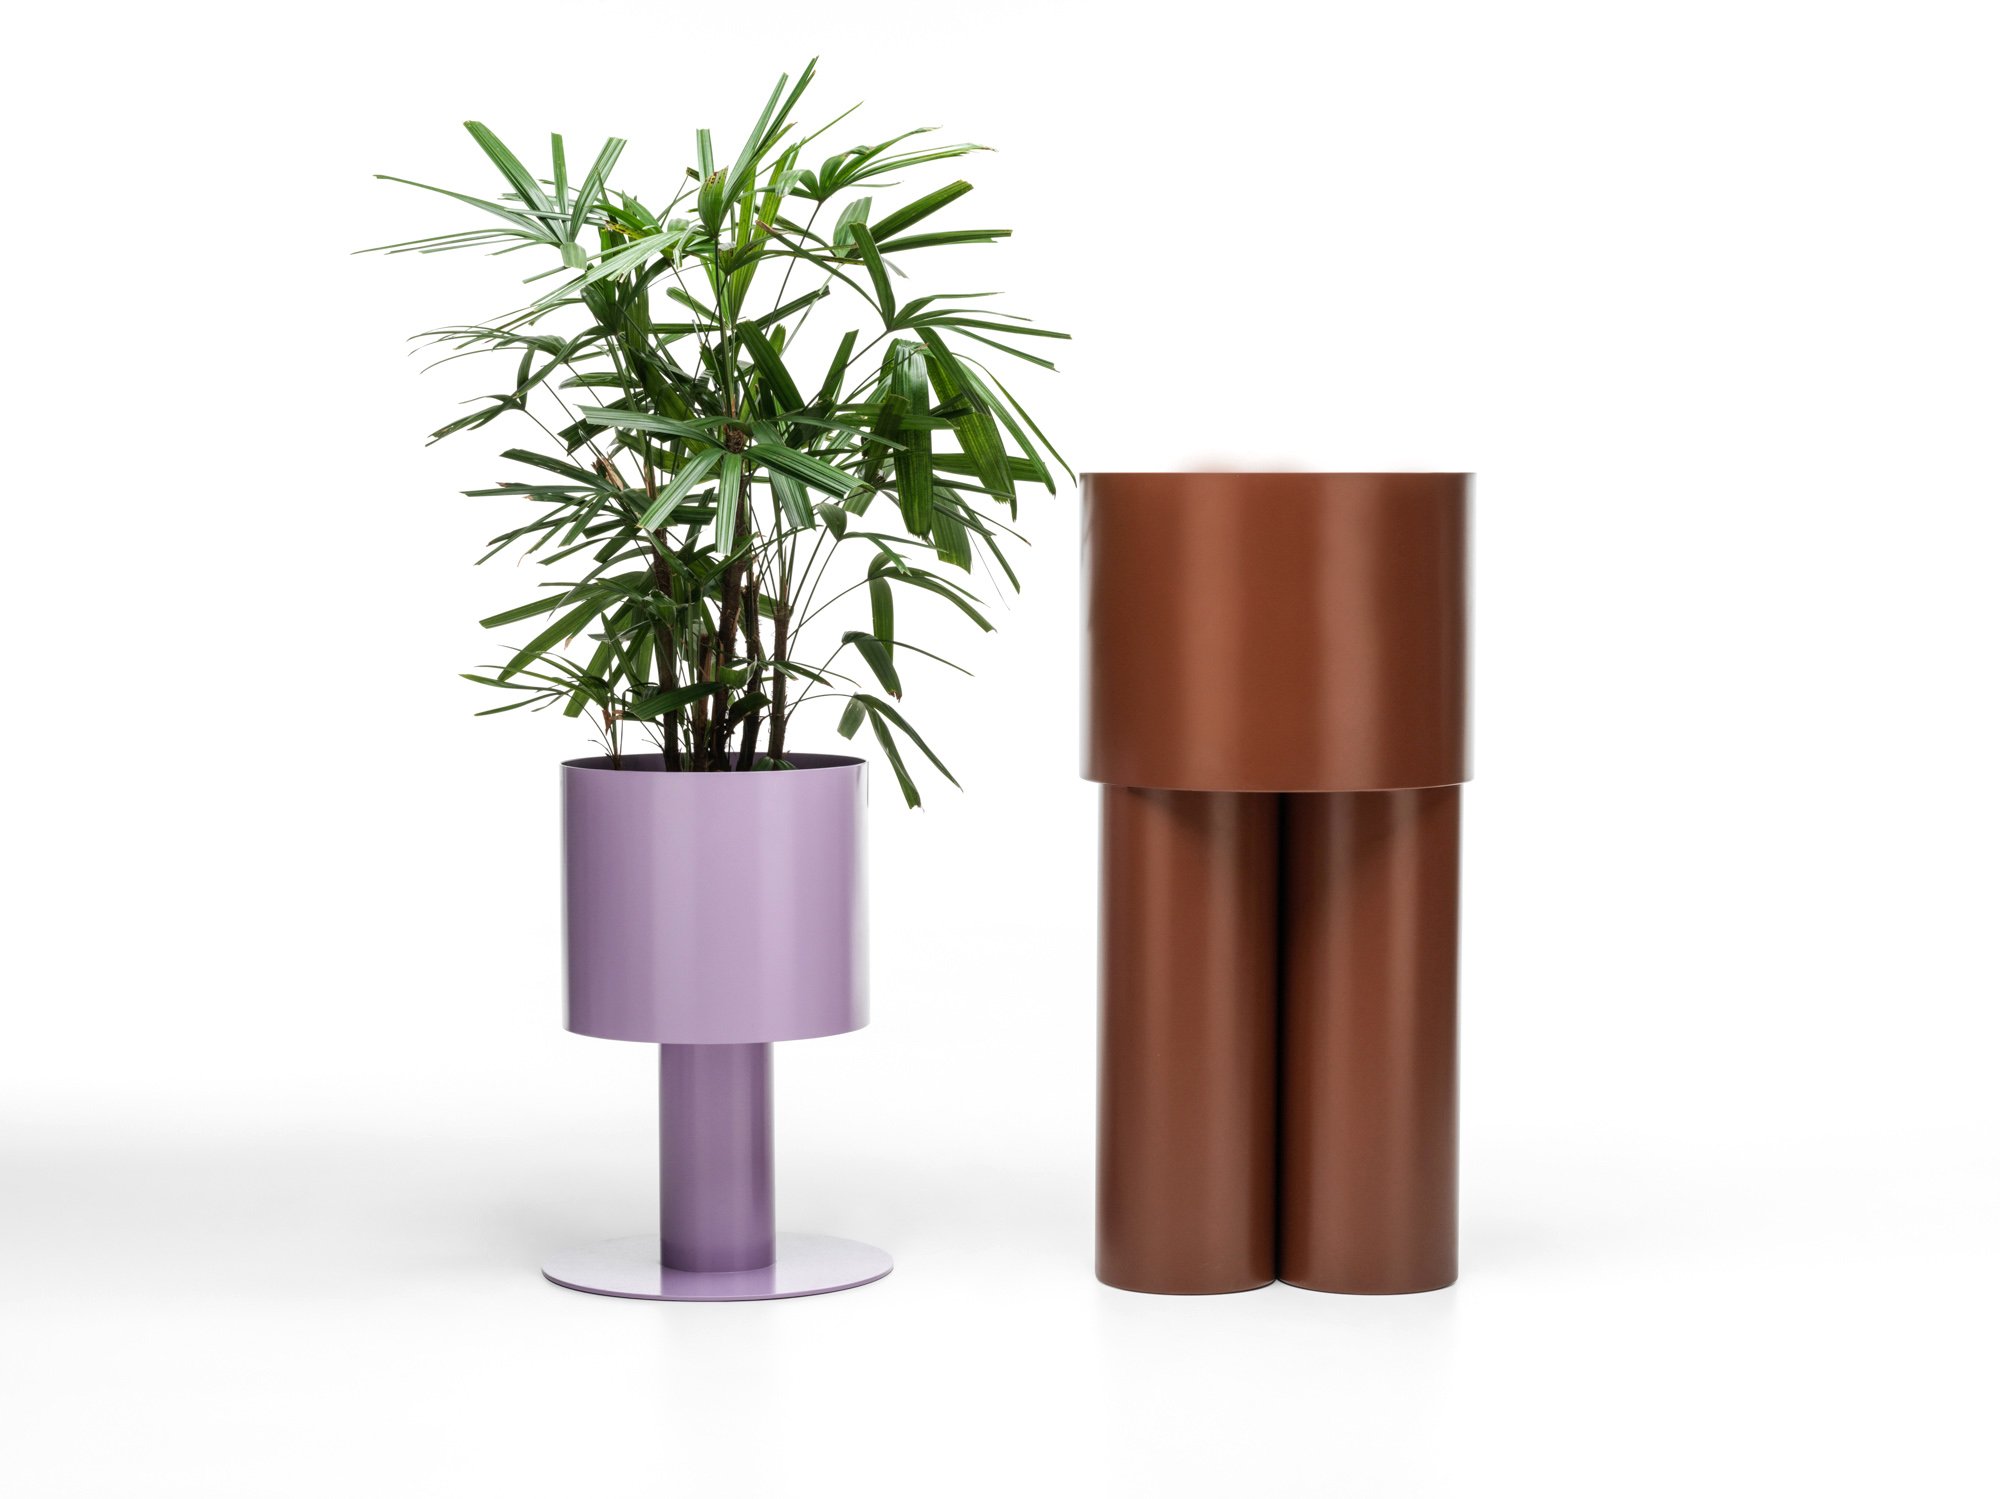 b6-b9-studiociao-ciao-planters-polished-stainlesssteel.jpg